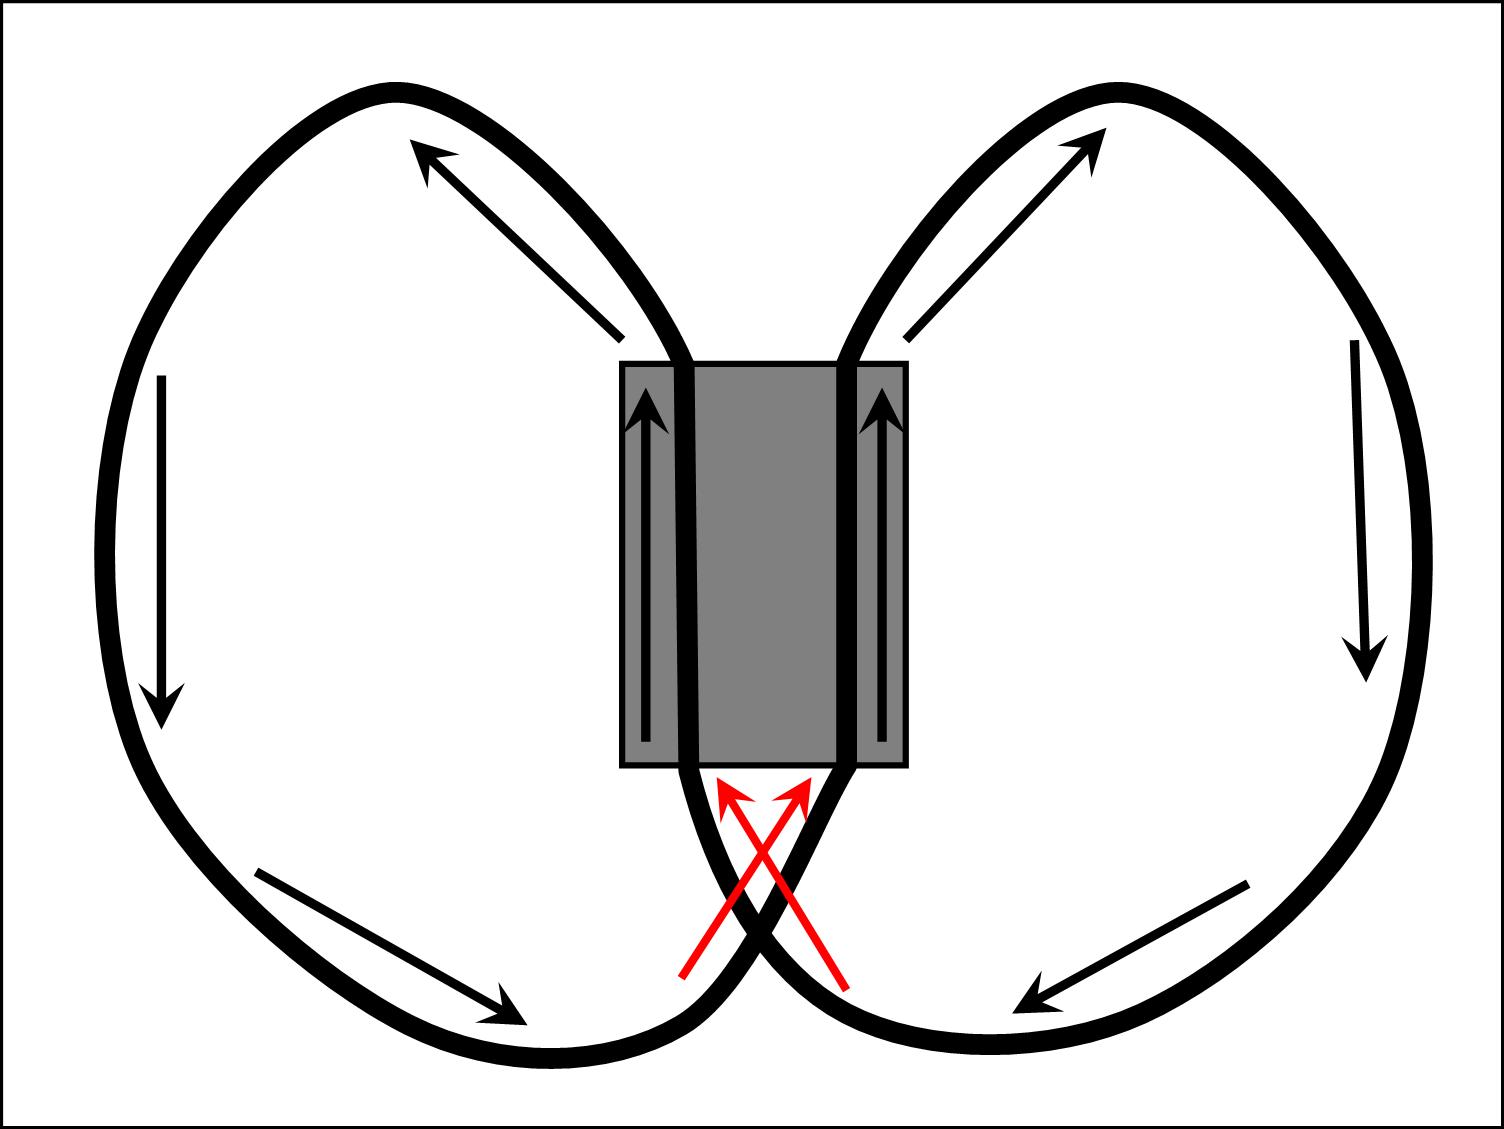 File:Mobius rollercoaster Schematic.jpg